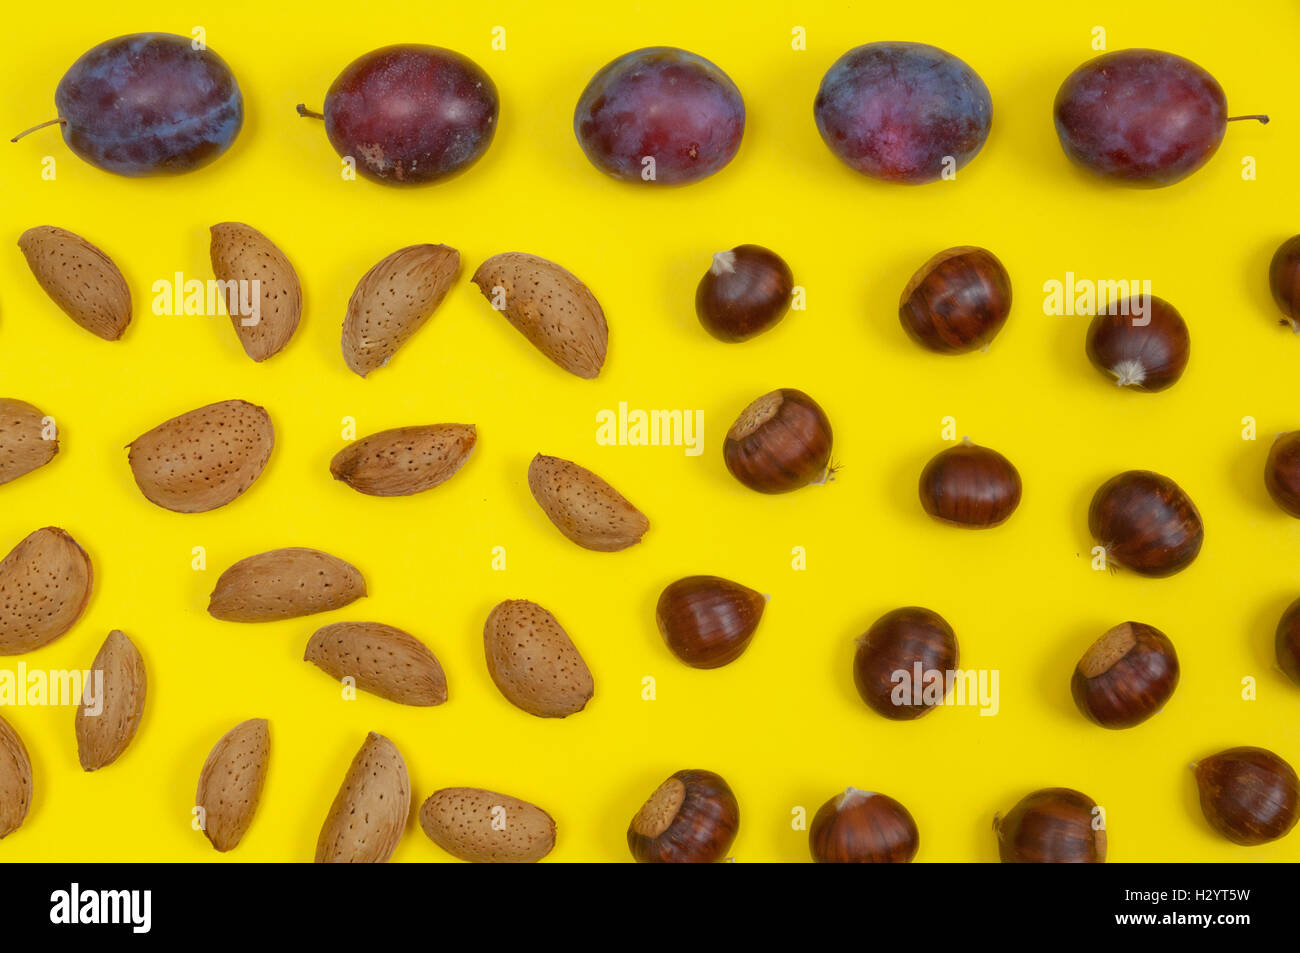 Fruits on yellow background Stock Photo